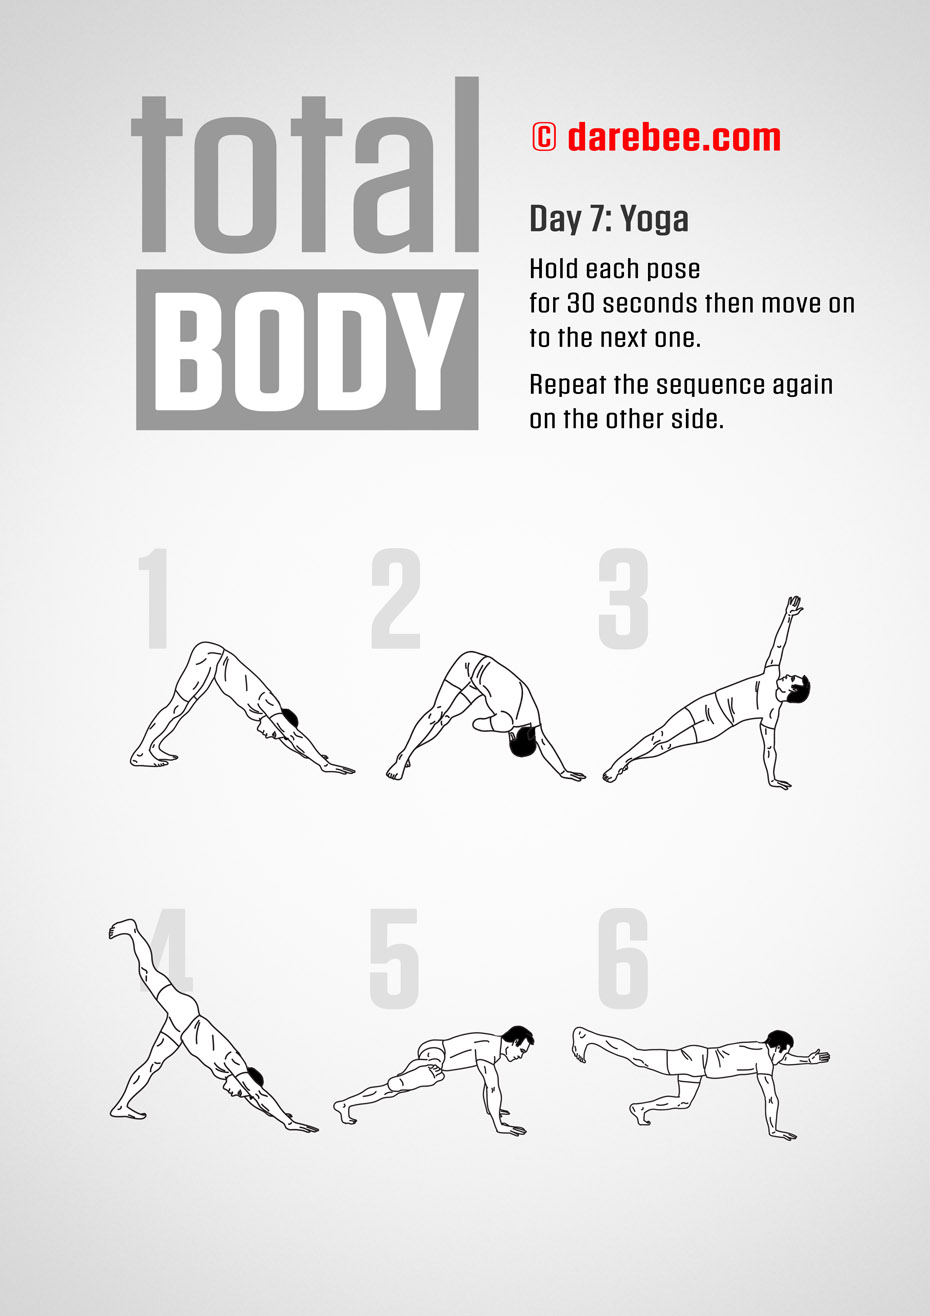 Total Body 30 Day Program by DAREBEE